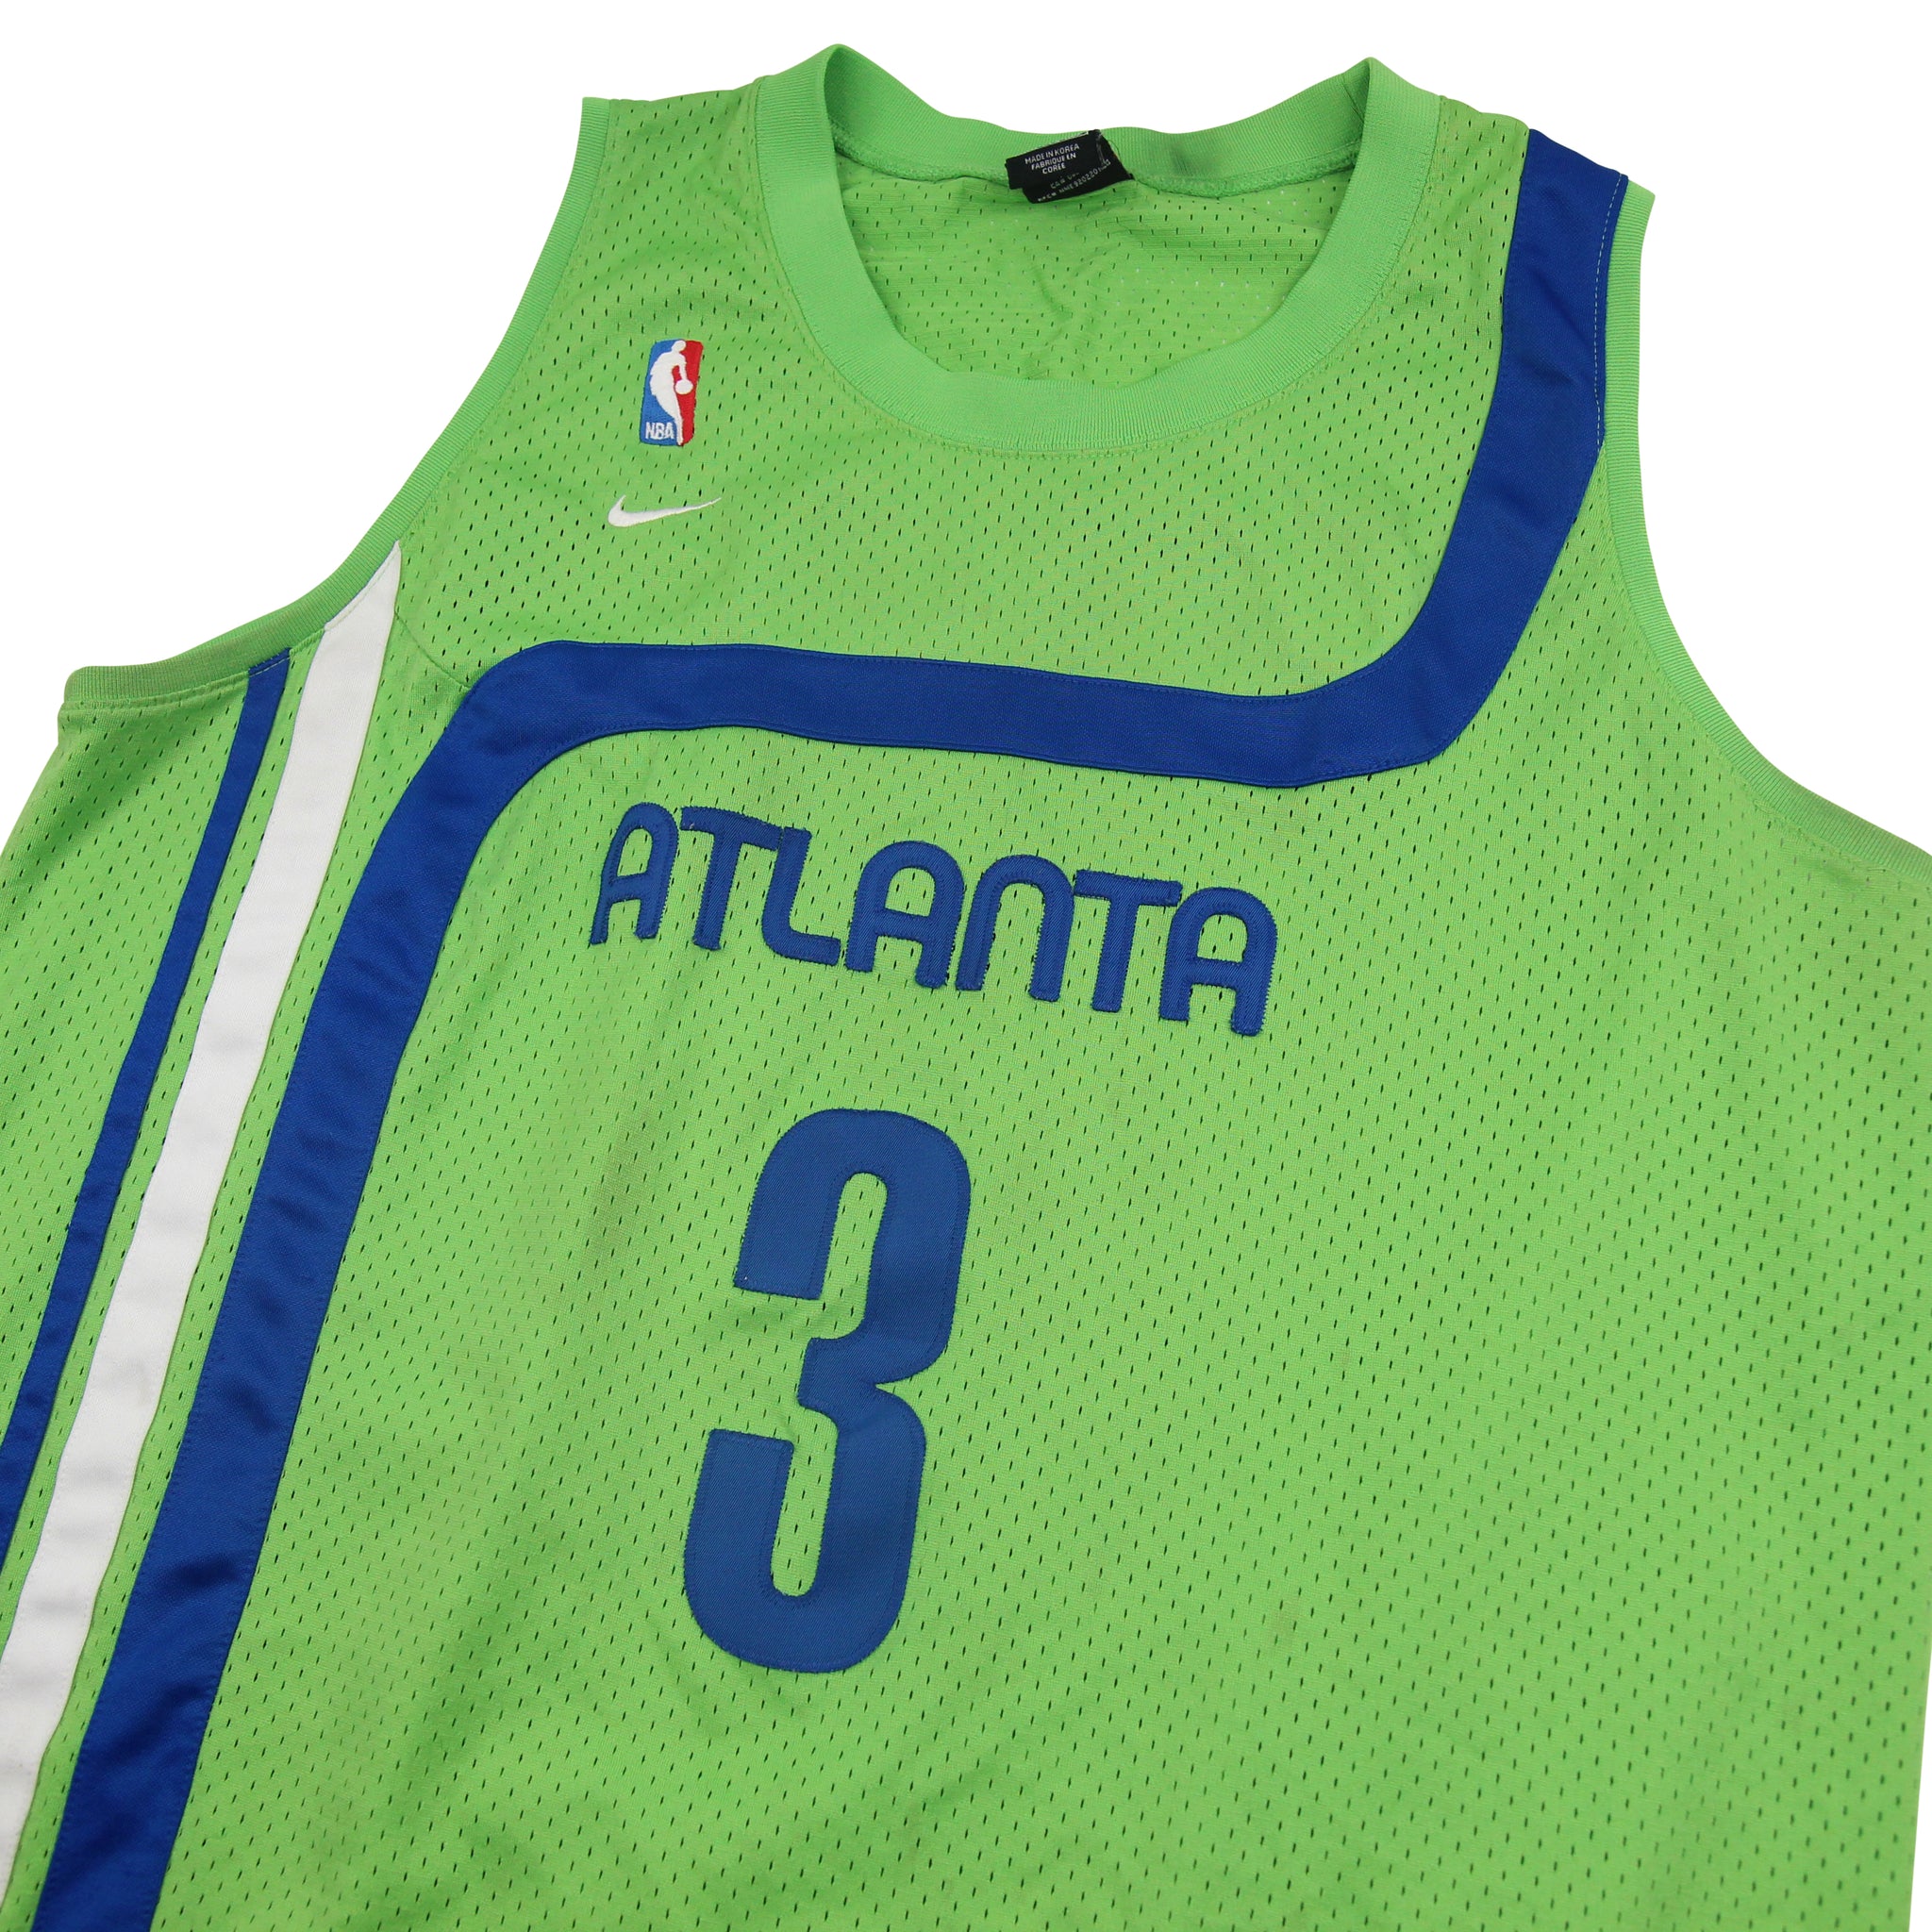 Nike Mens Atlanta Hawks Shareef Abdur-Rahim #3 Basketball Jersey Yellow  Size XL